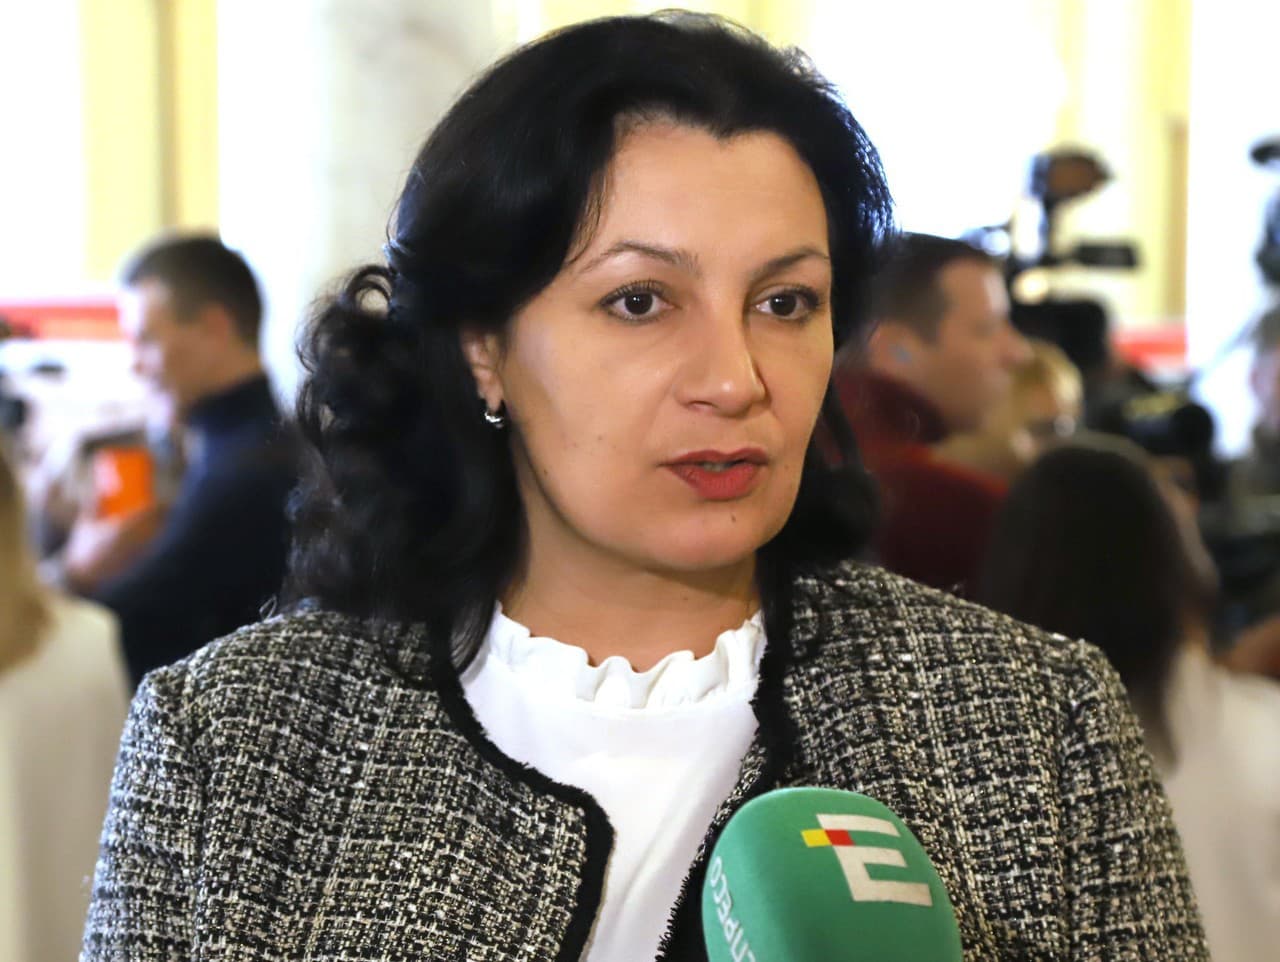 Ukrajinská politička Ivanna Klympush-Tsinsadze